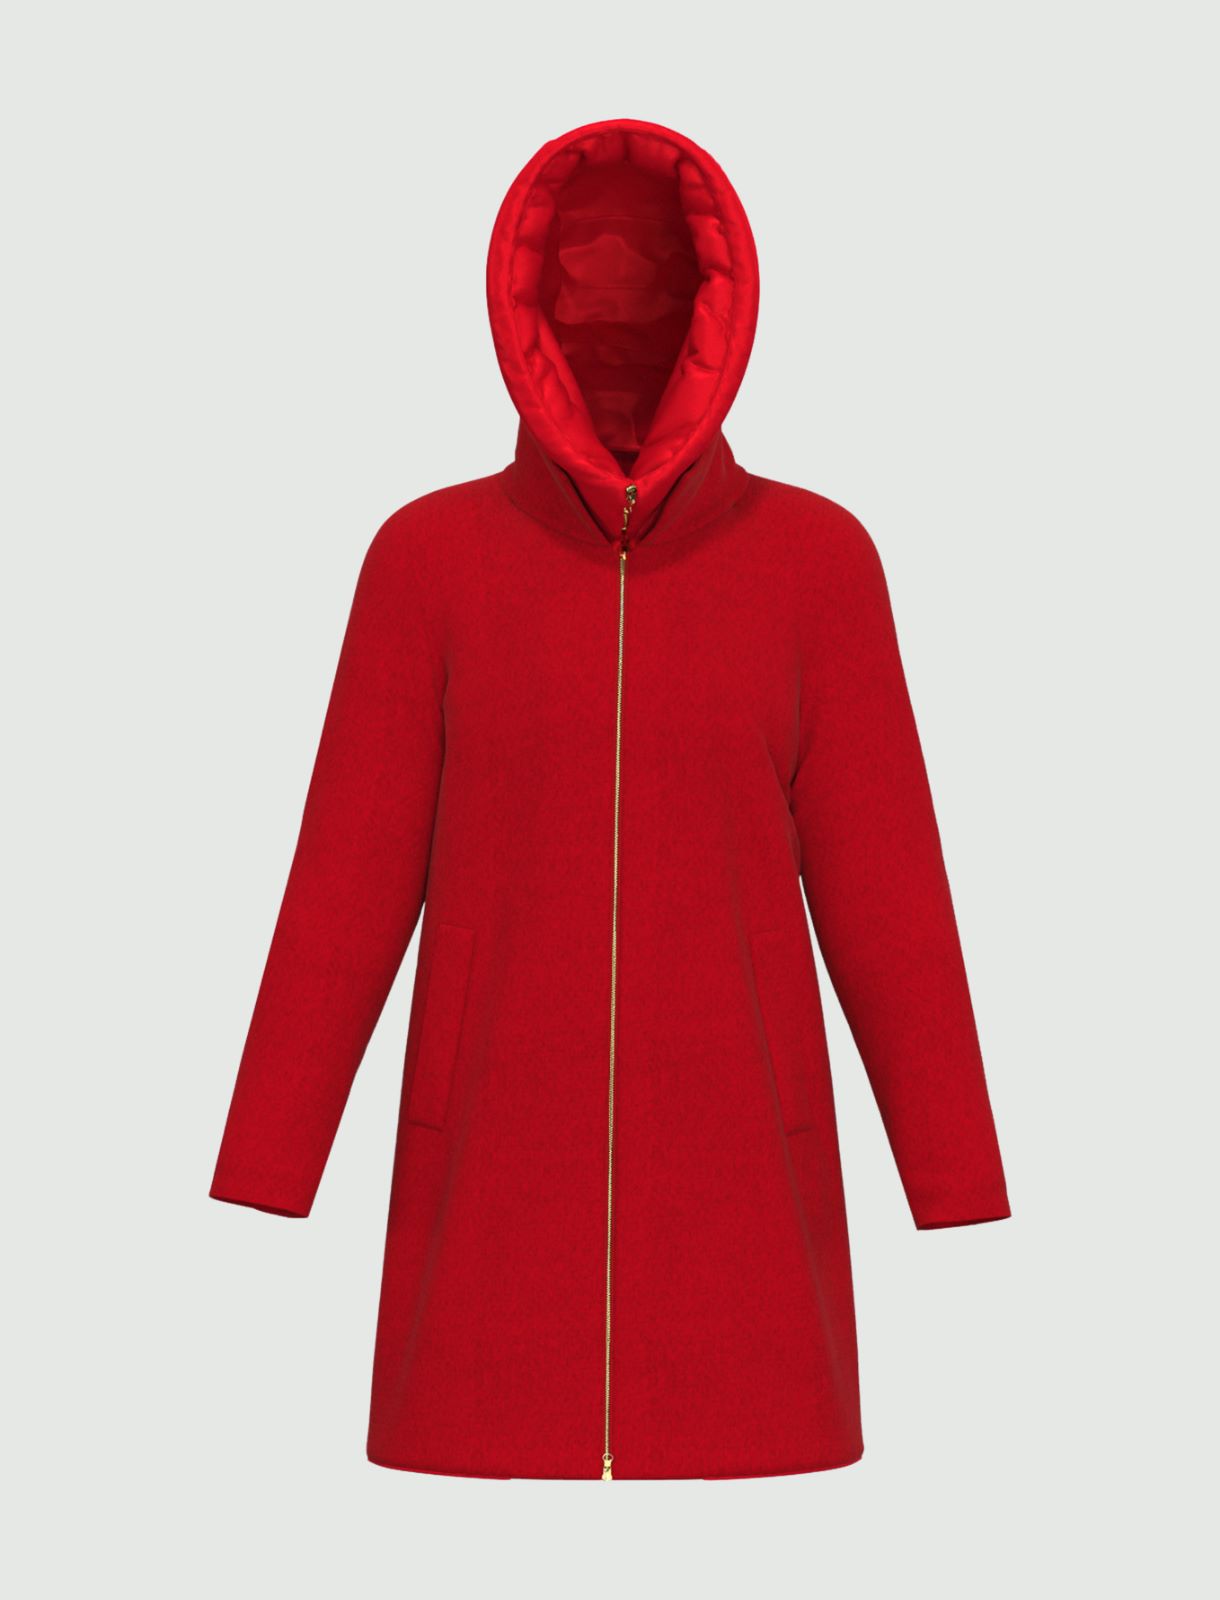 Mantel aus Wollstoff - Rot - Marella - 5